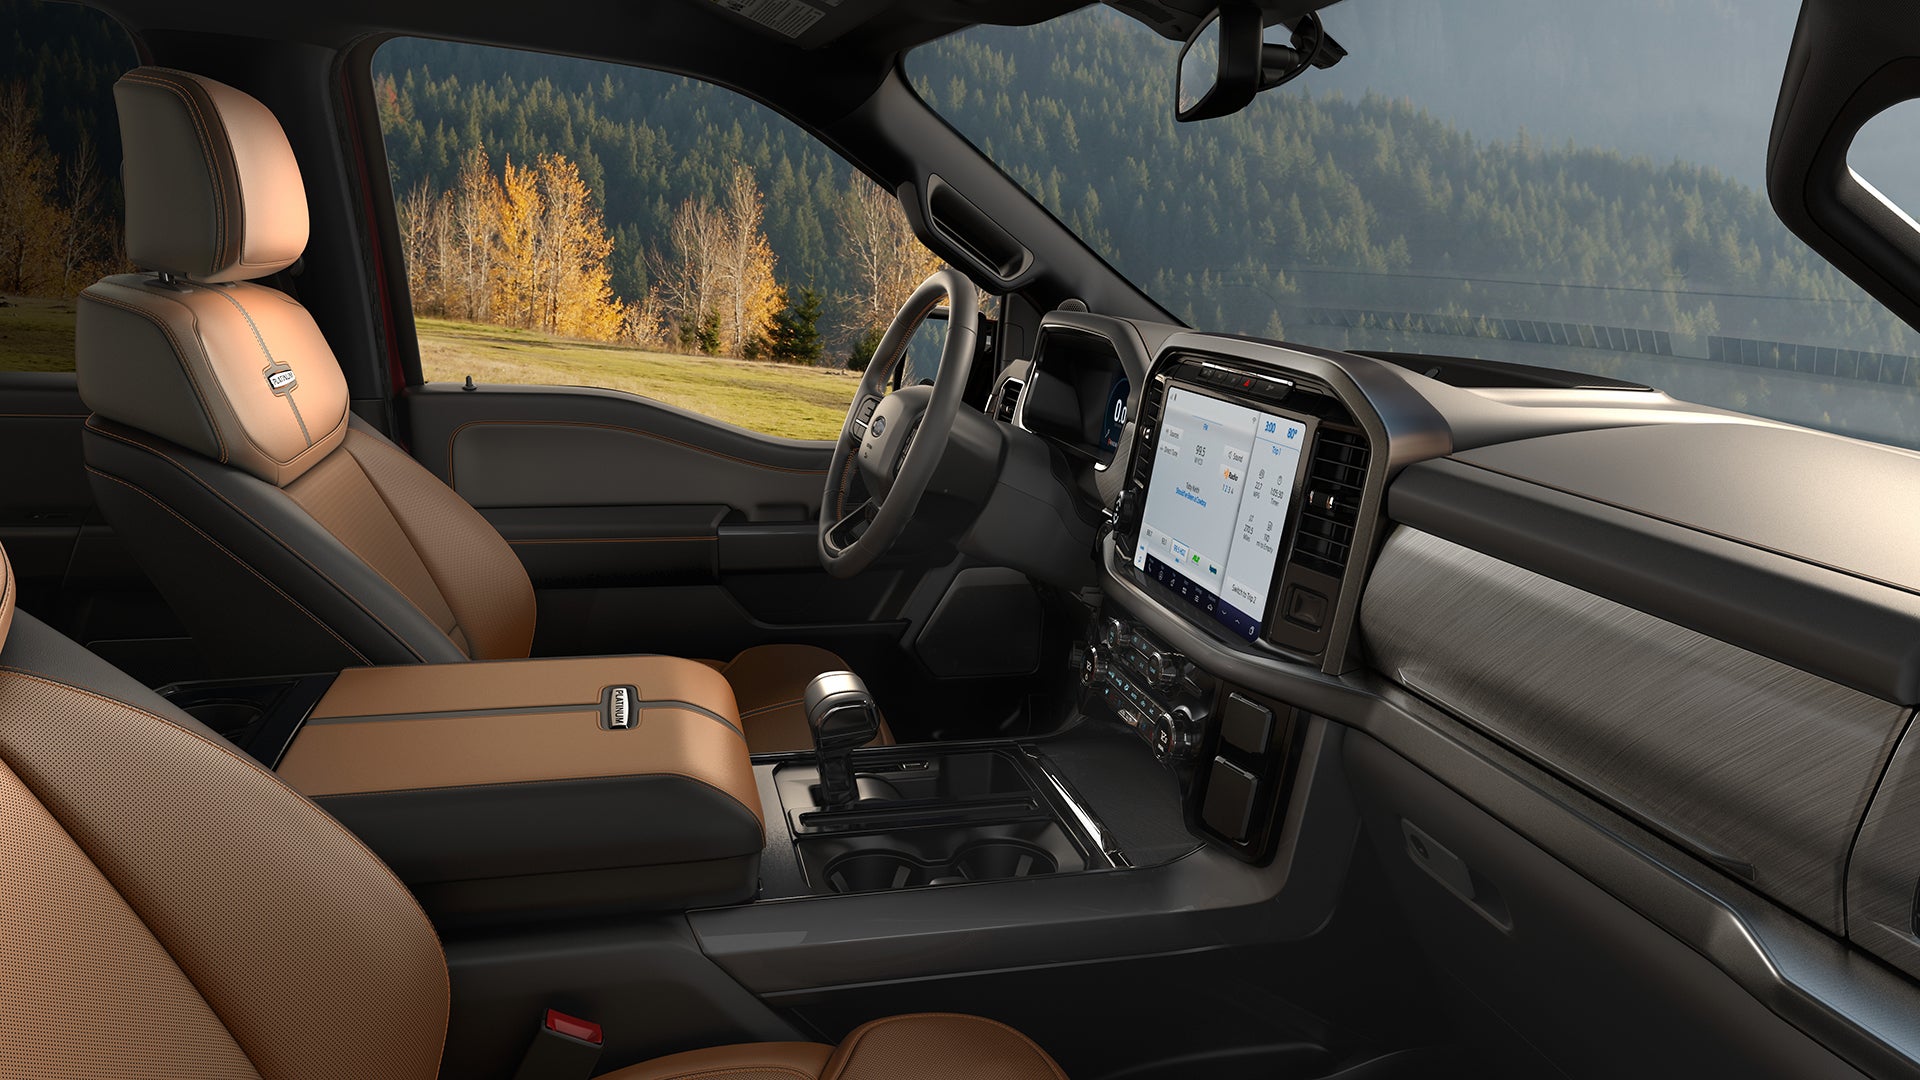 2021 Ford F-150 Platinum Interior, <i>Ford</i>